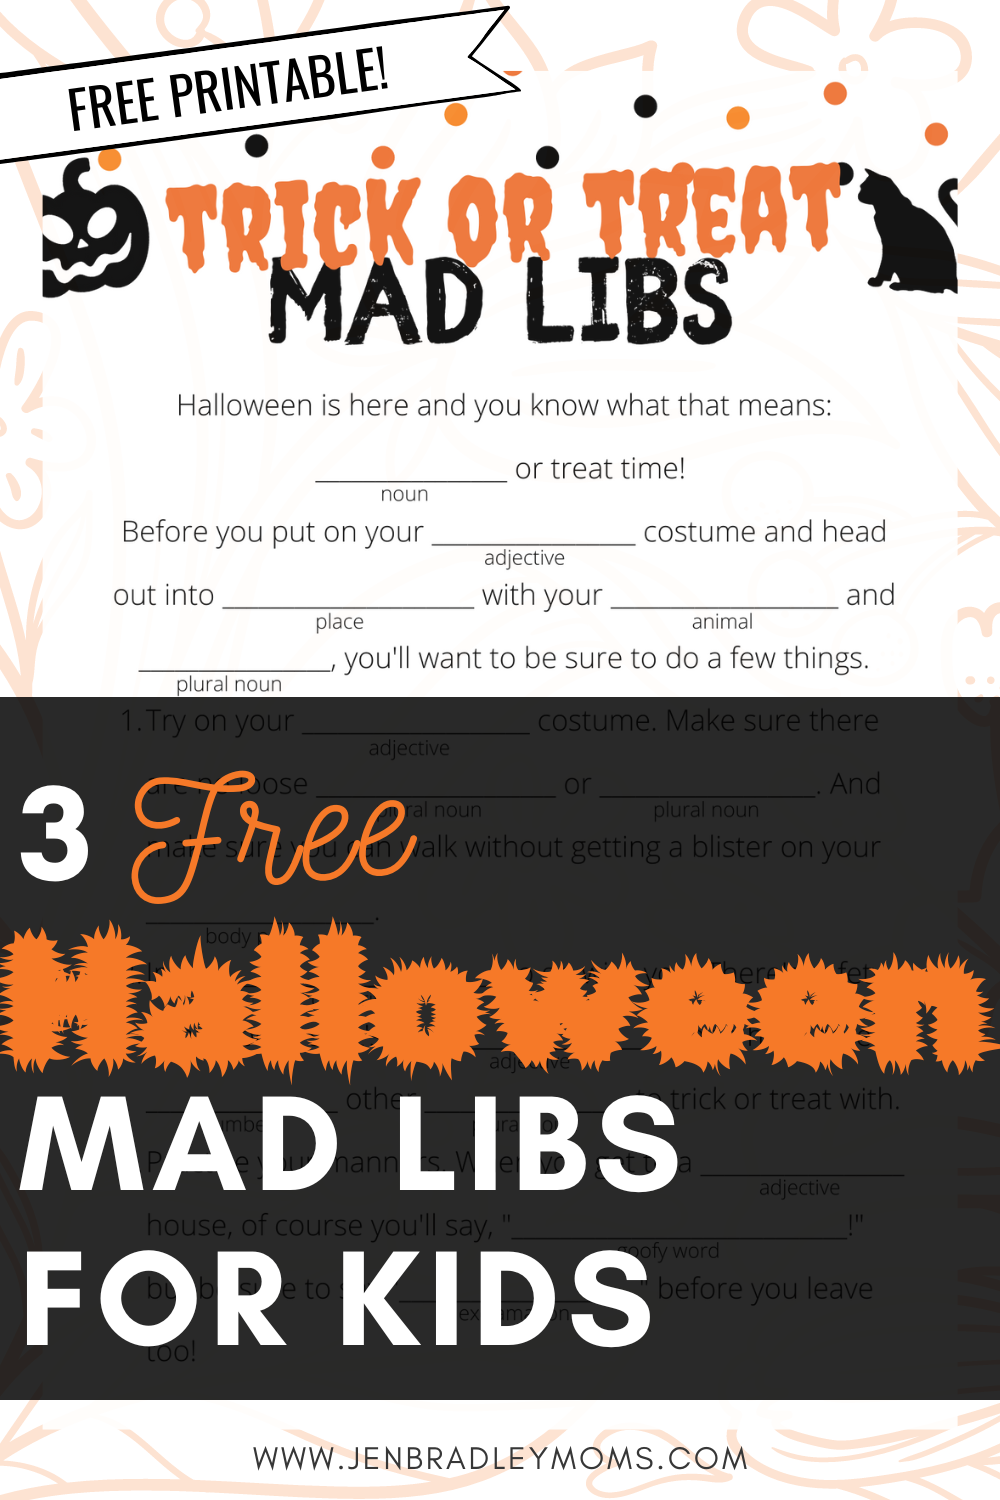 3 Fun Halloween Mad Libs Stories for Kids